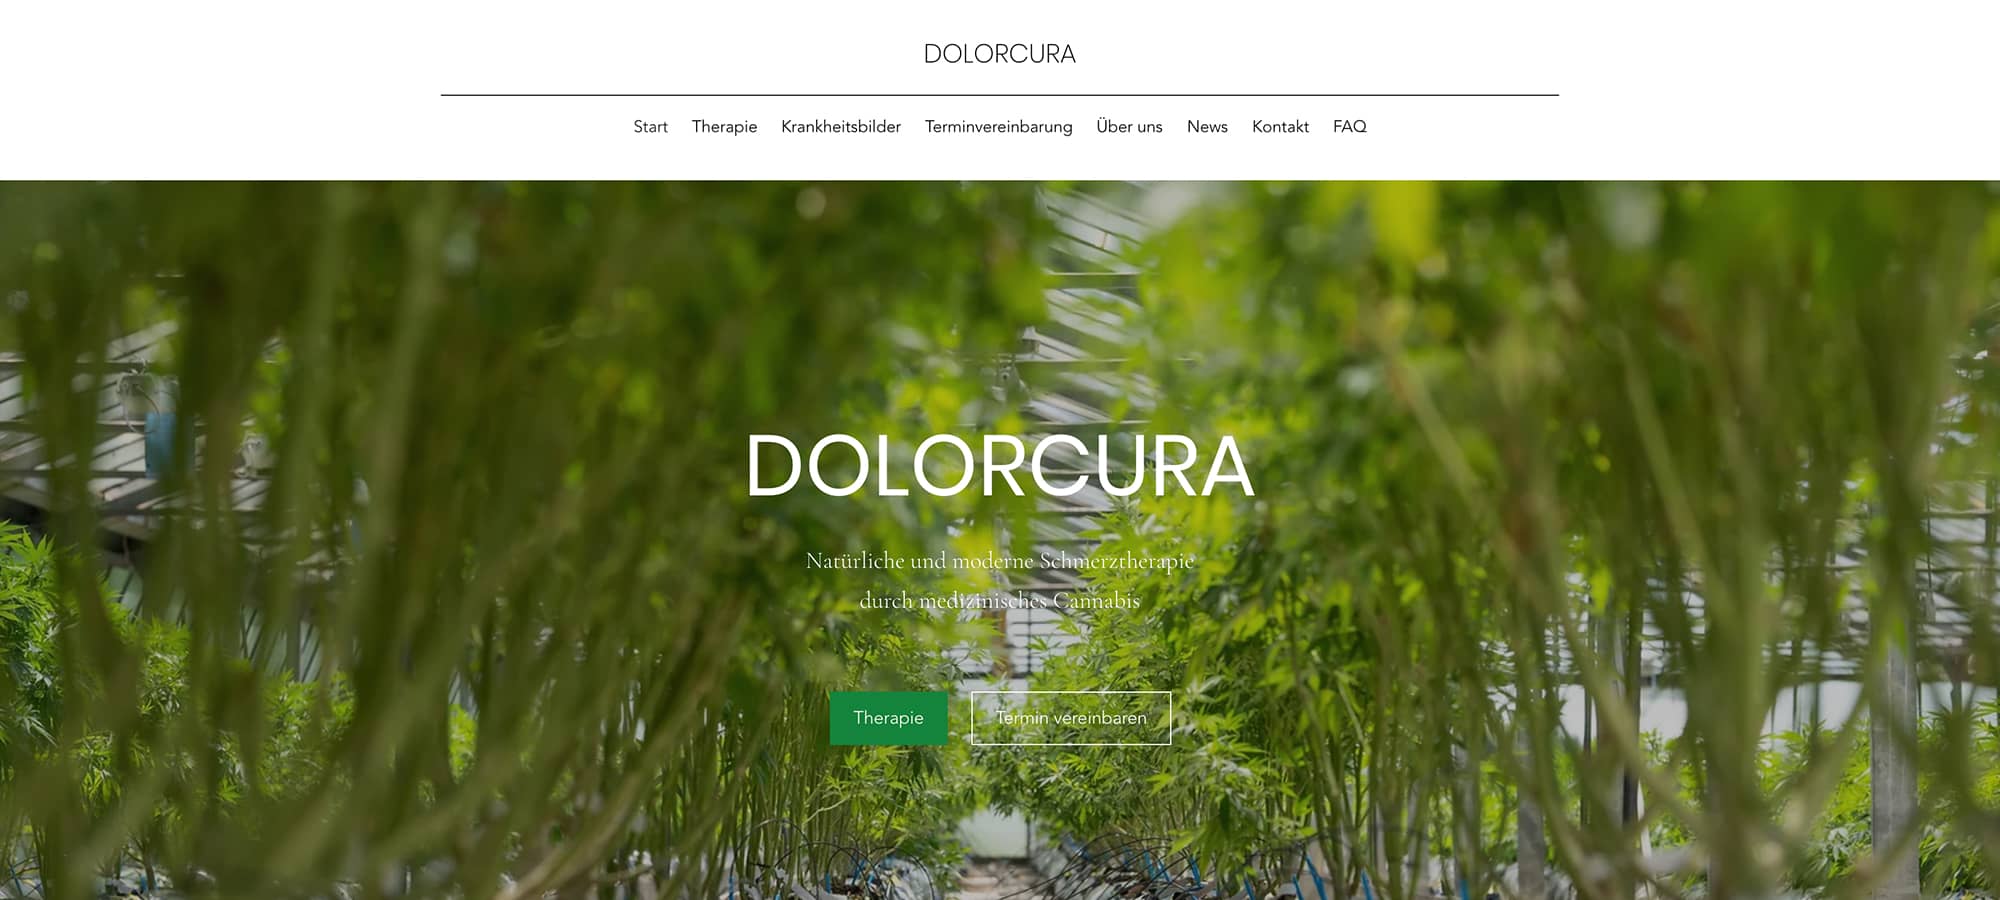 DolorCura - Details im Überblick